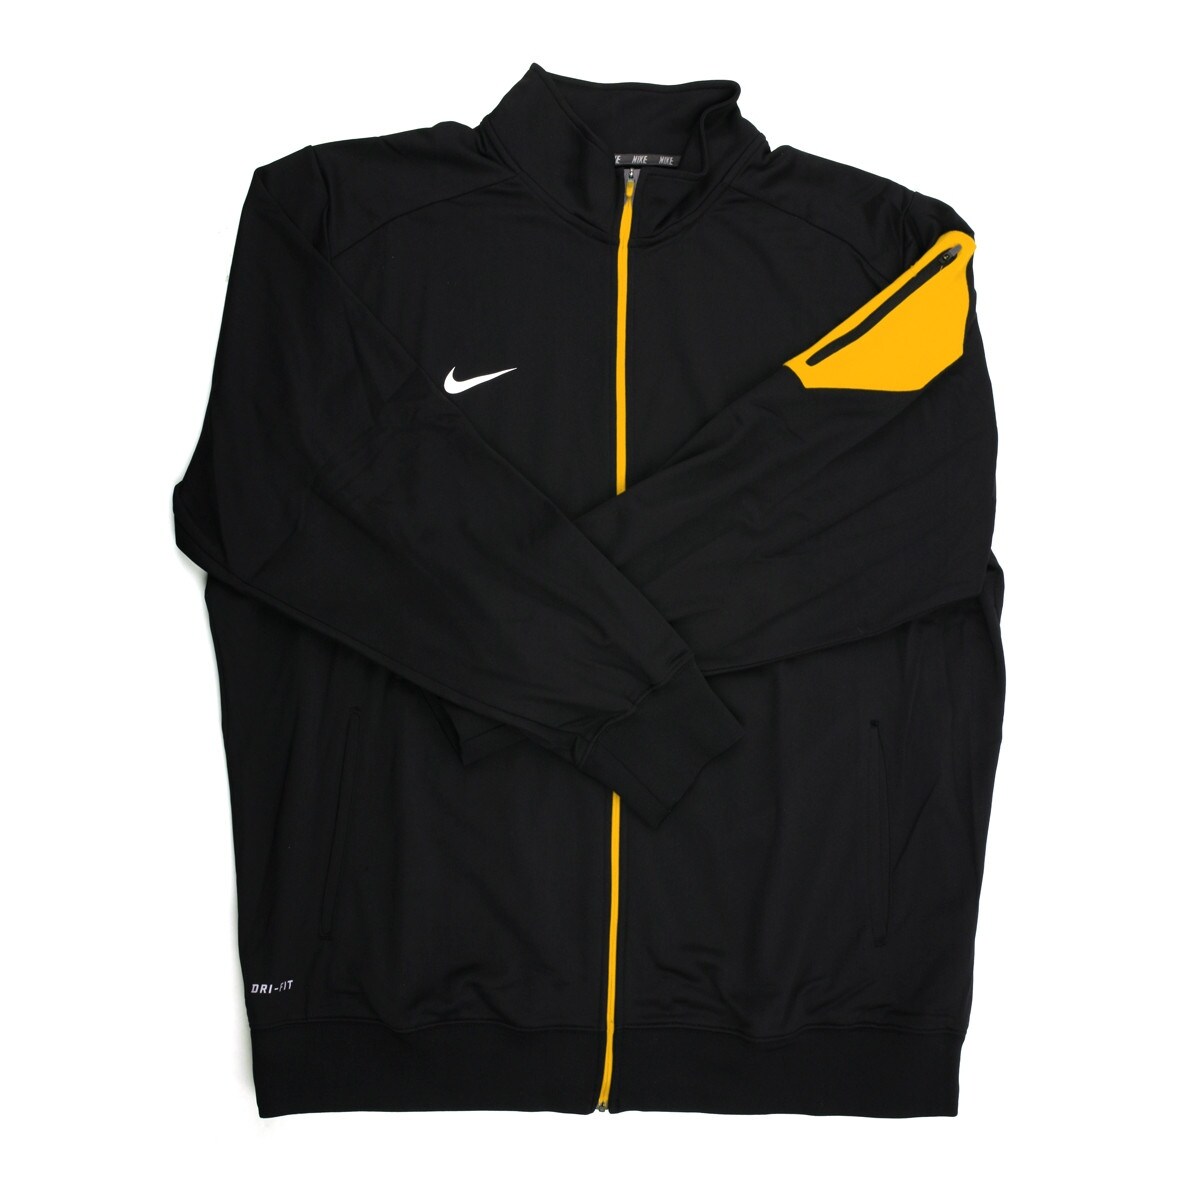 black and yellow jacket nike